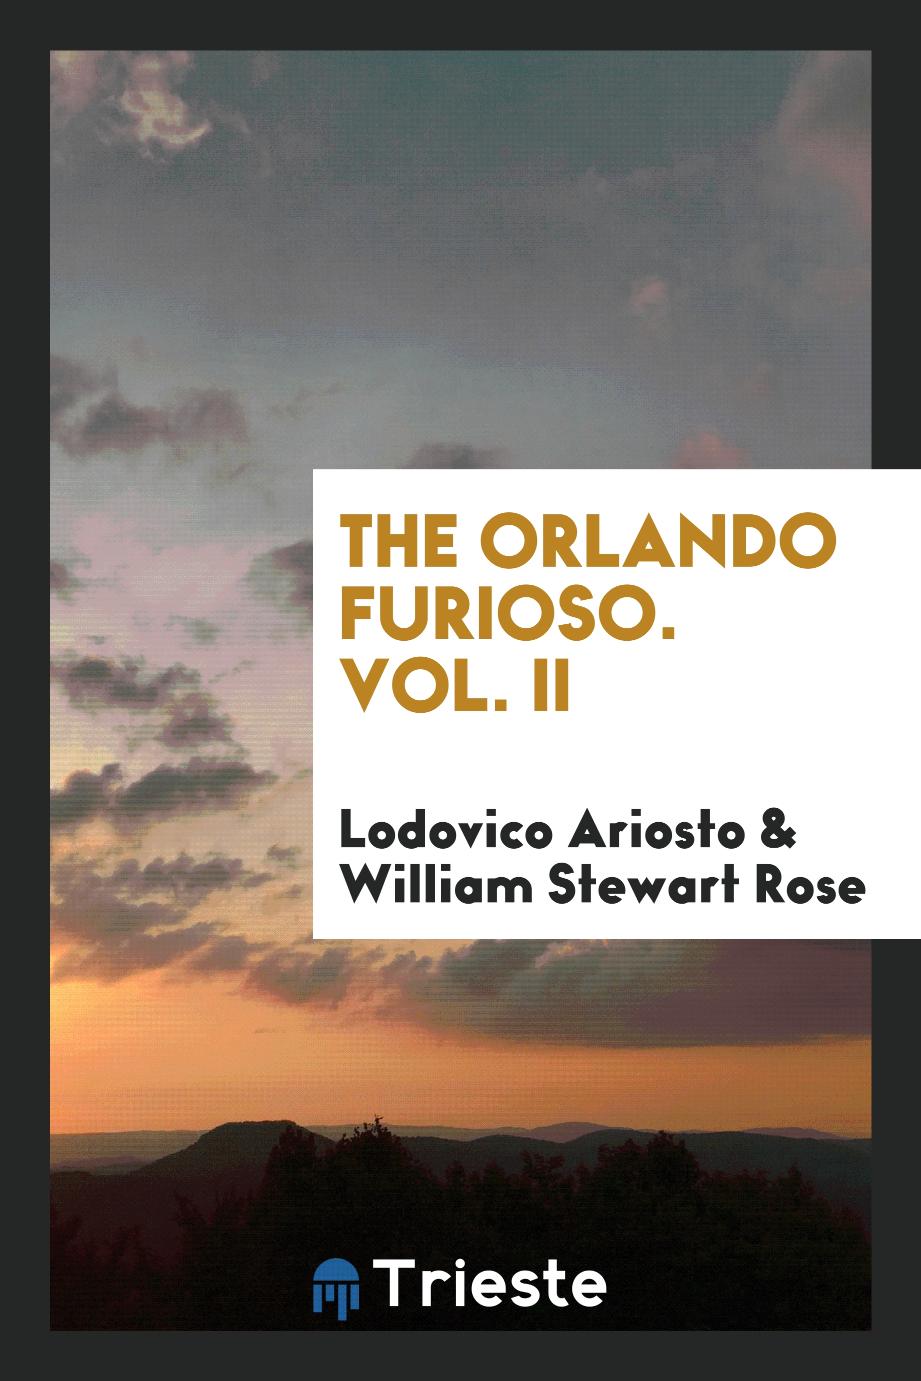 The Orlando furioso. Vol. II